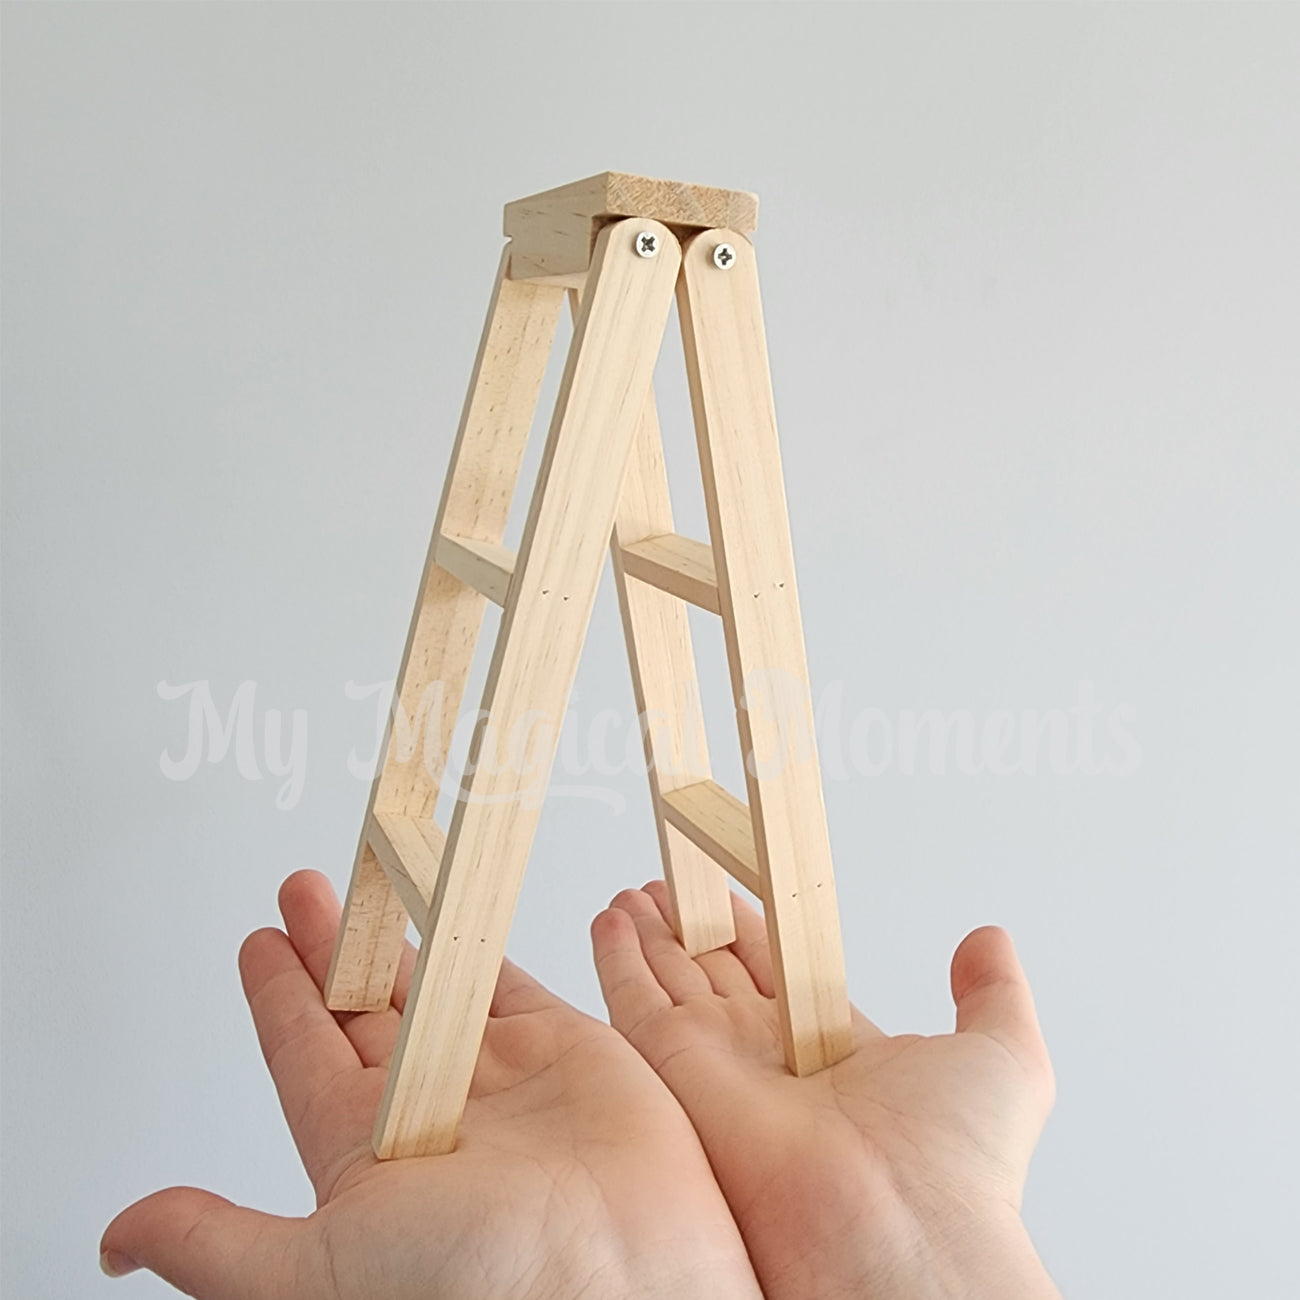 Wooden ladder elf prop comparison in human hands